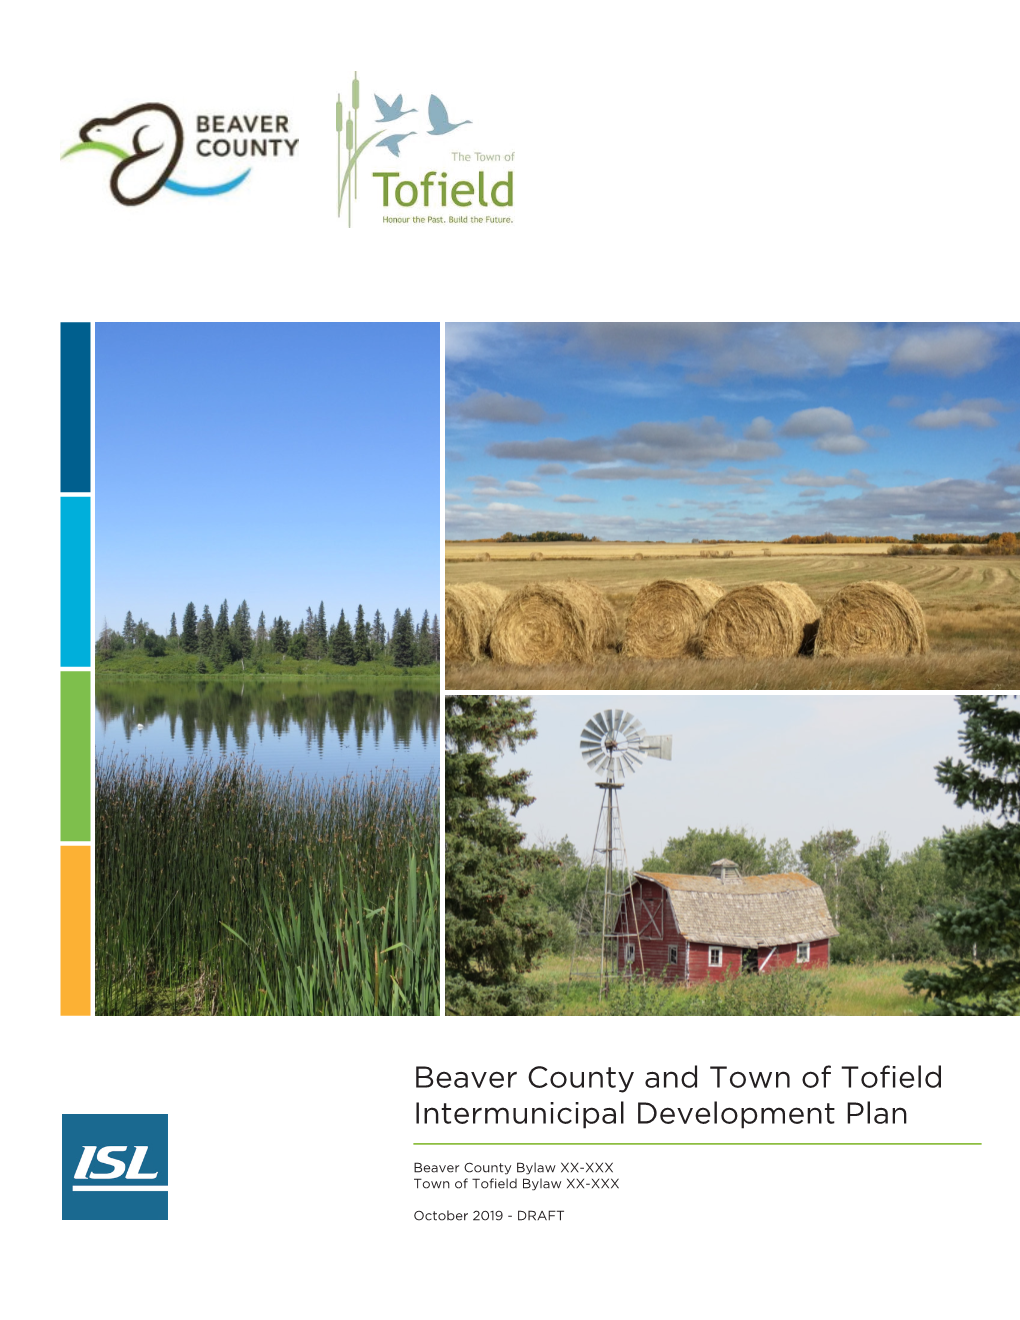 Beaver County and Town of Tofield Intermunicipal Development Plan